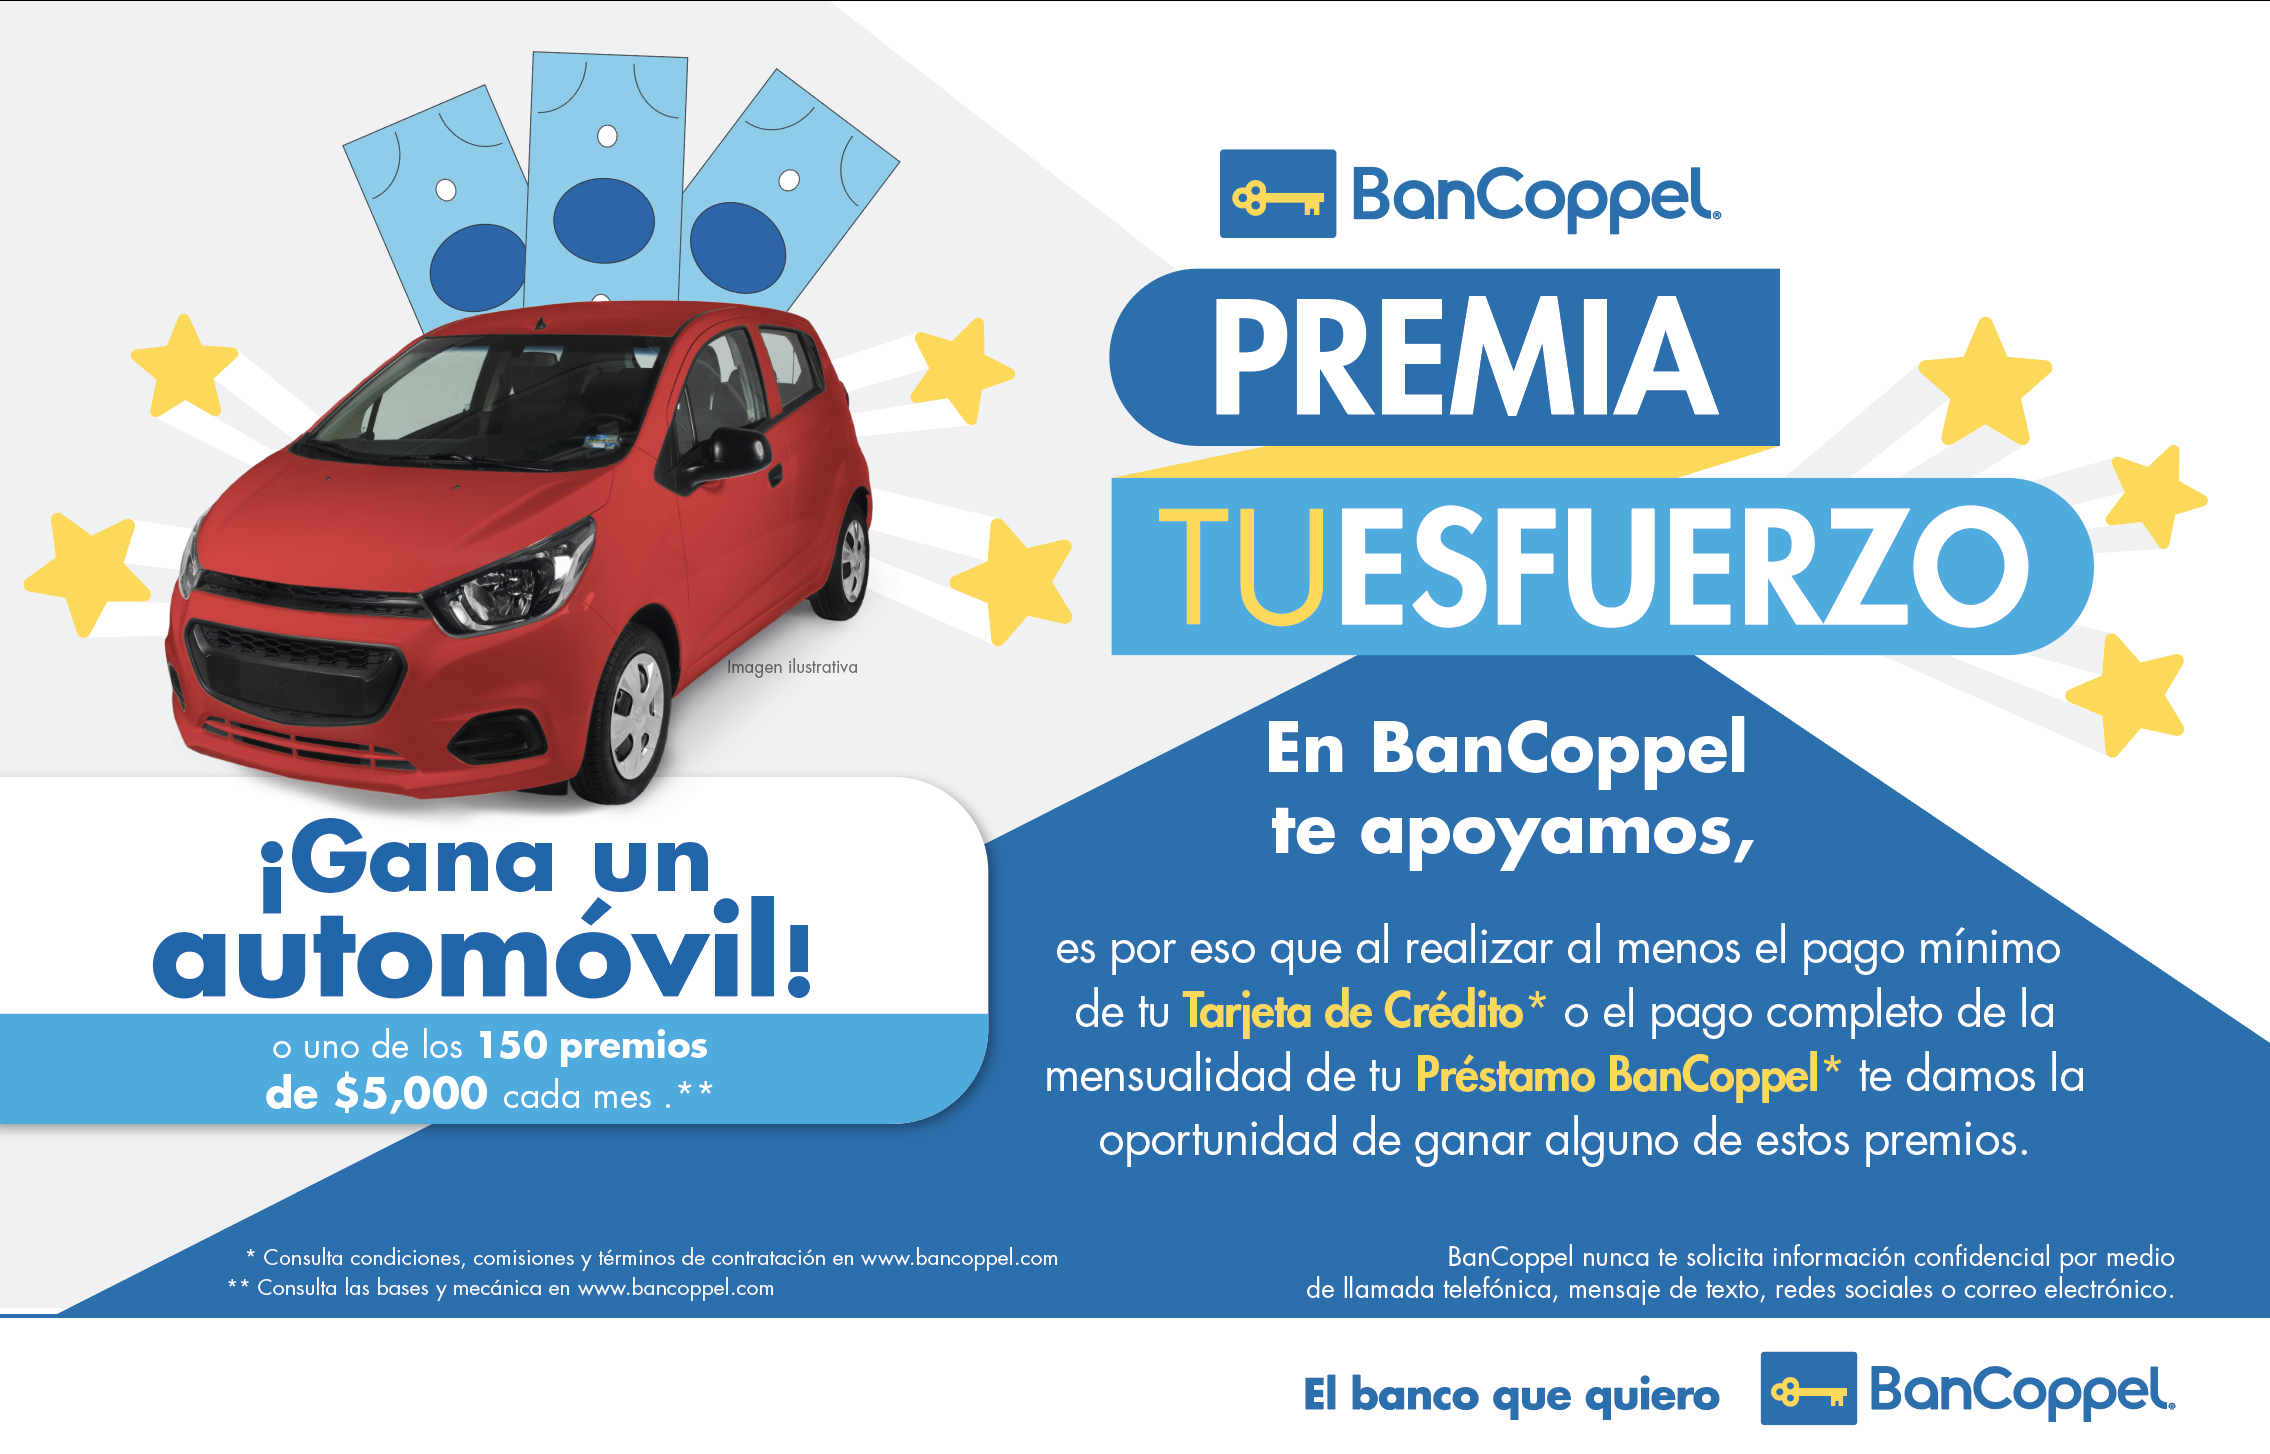 BanCoppel premia tu esfuerzo regala auto cinco mil pesos